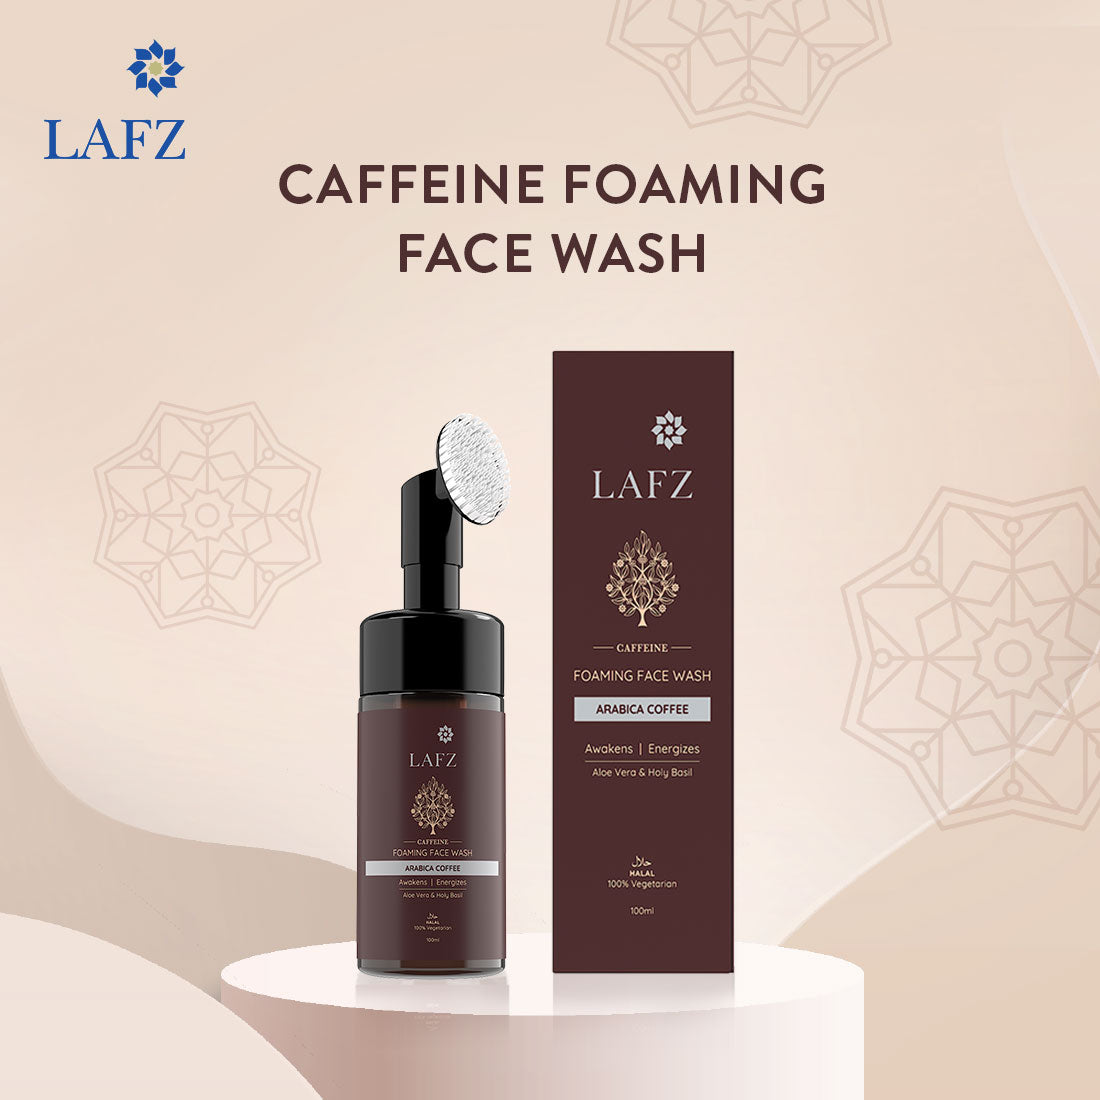 Lafz Foaming Face Wash (100ml) - Caffeine